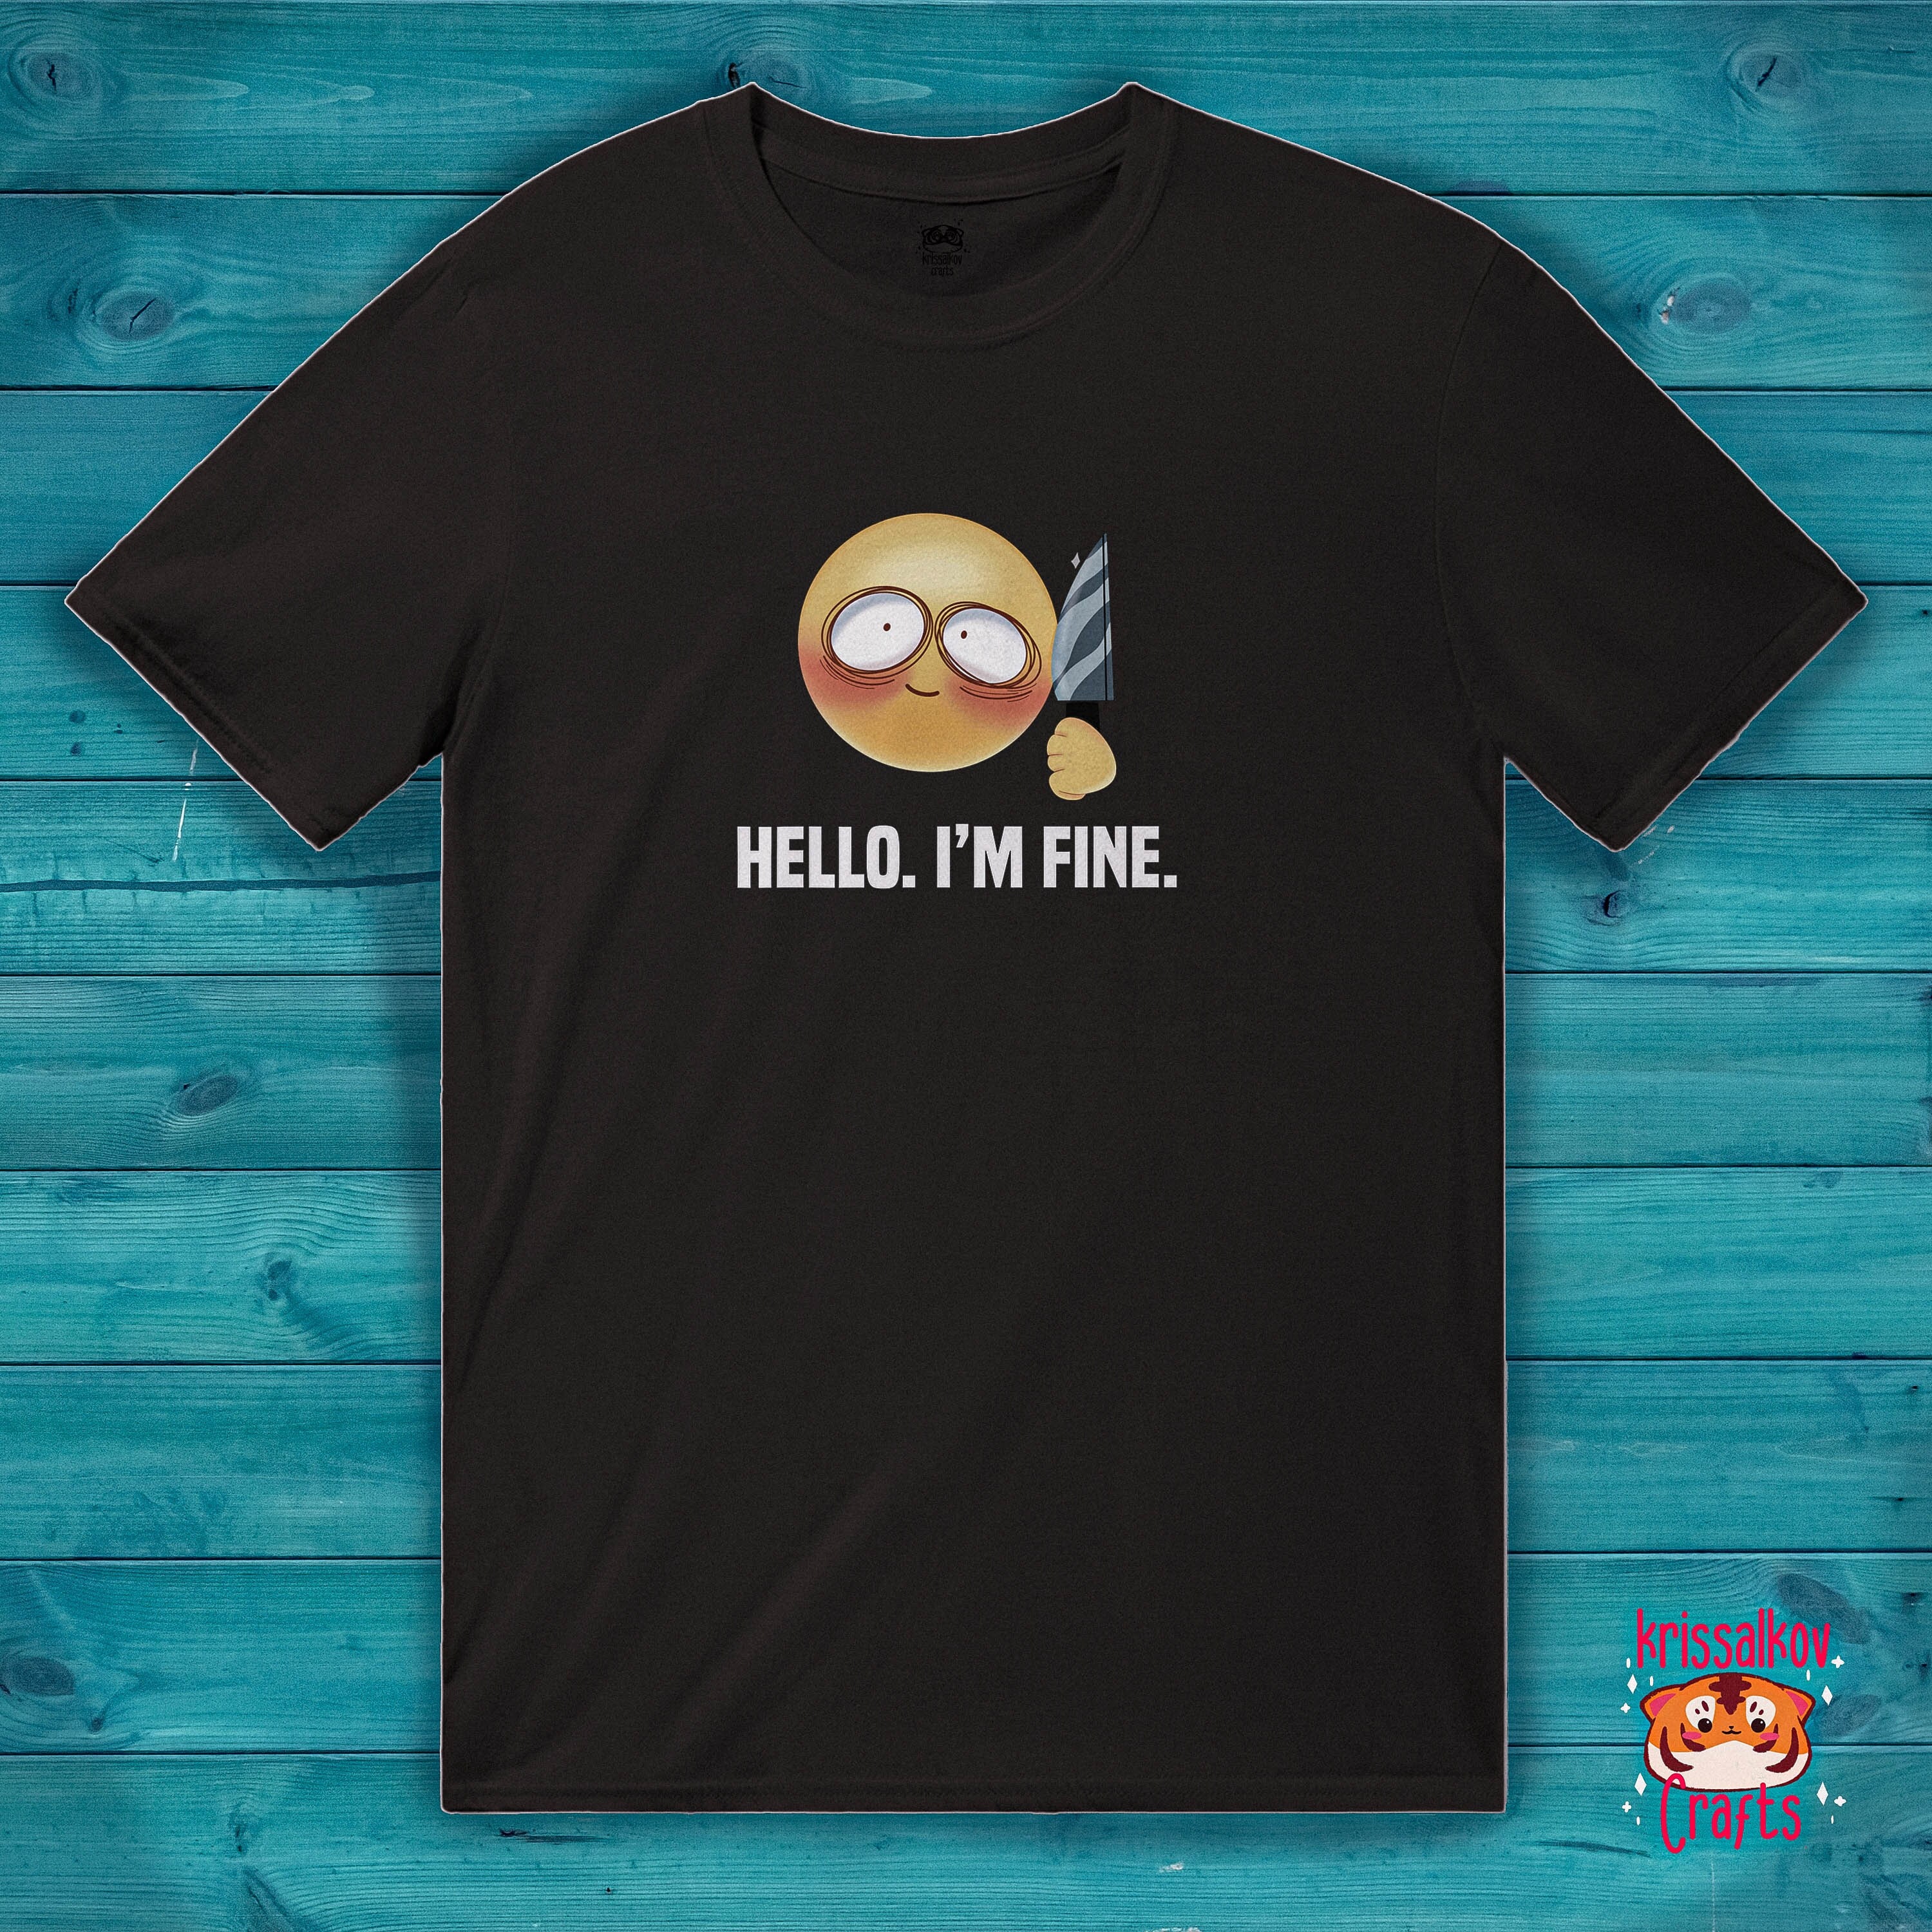 Funny xD Emoticon T-Shirt Gamer Meme Emoji xD Gaming Memes Art Board Print  for Sale by TheCreekMan